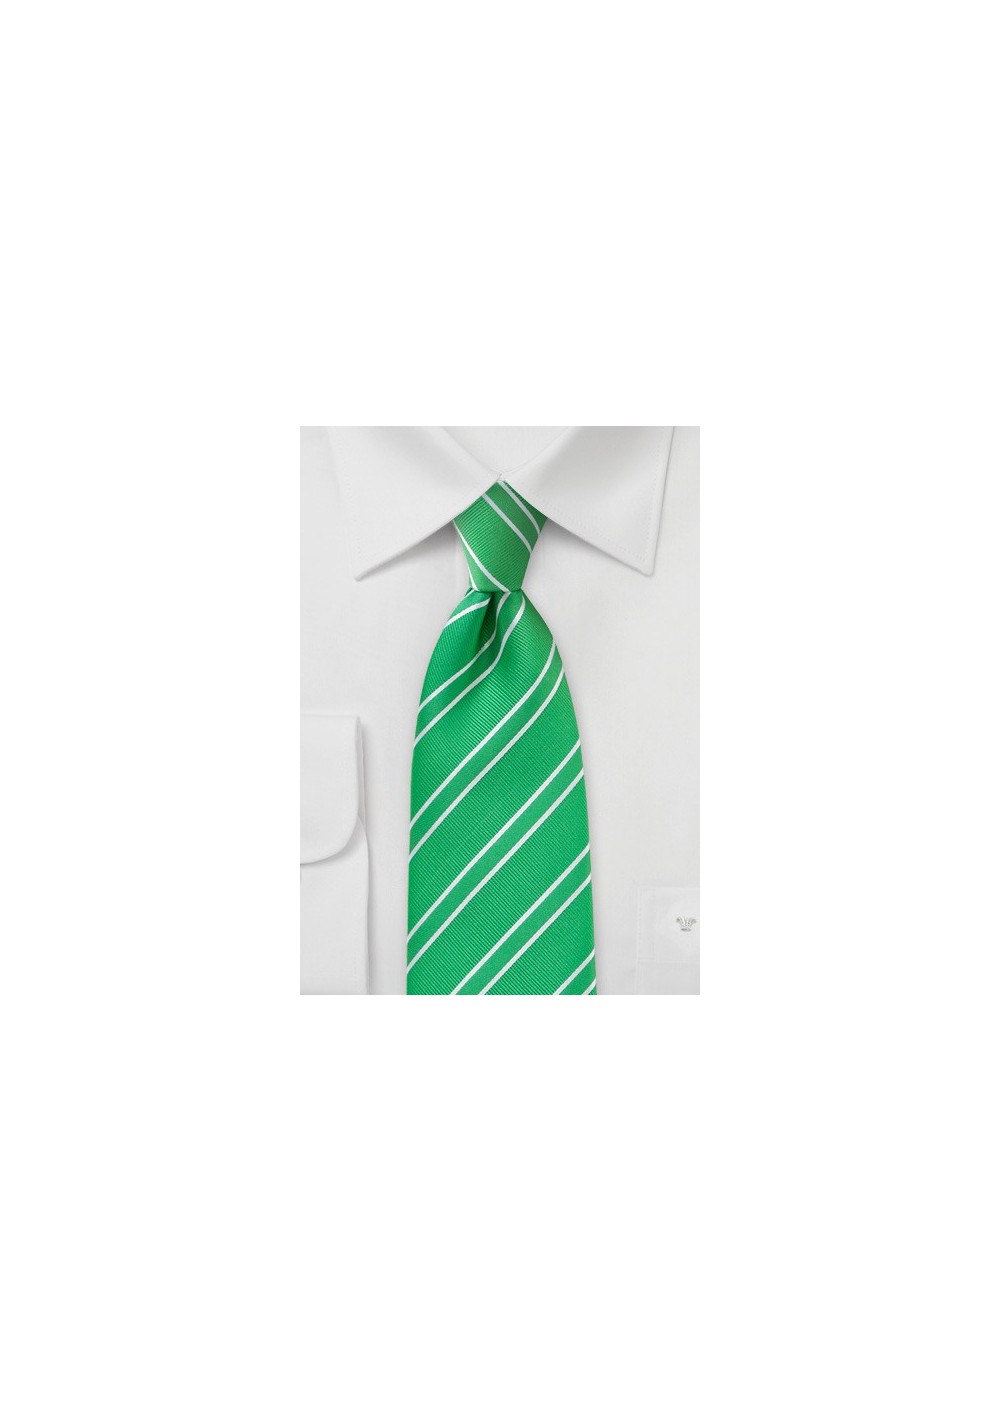 Punchy Grass Green Striped Tie